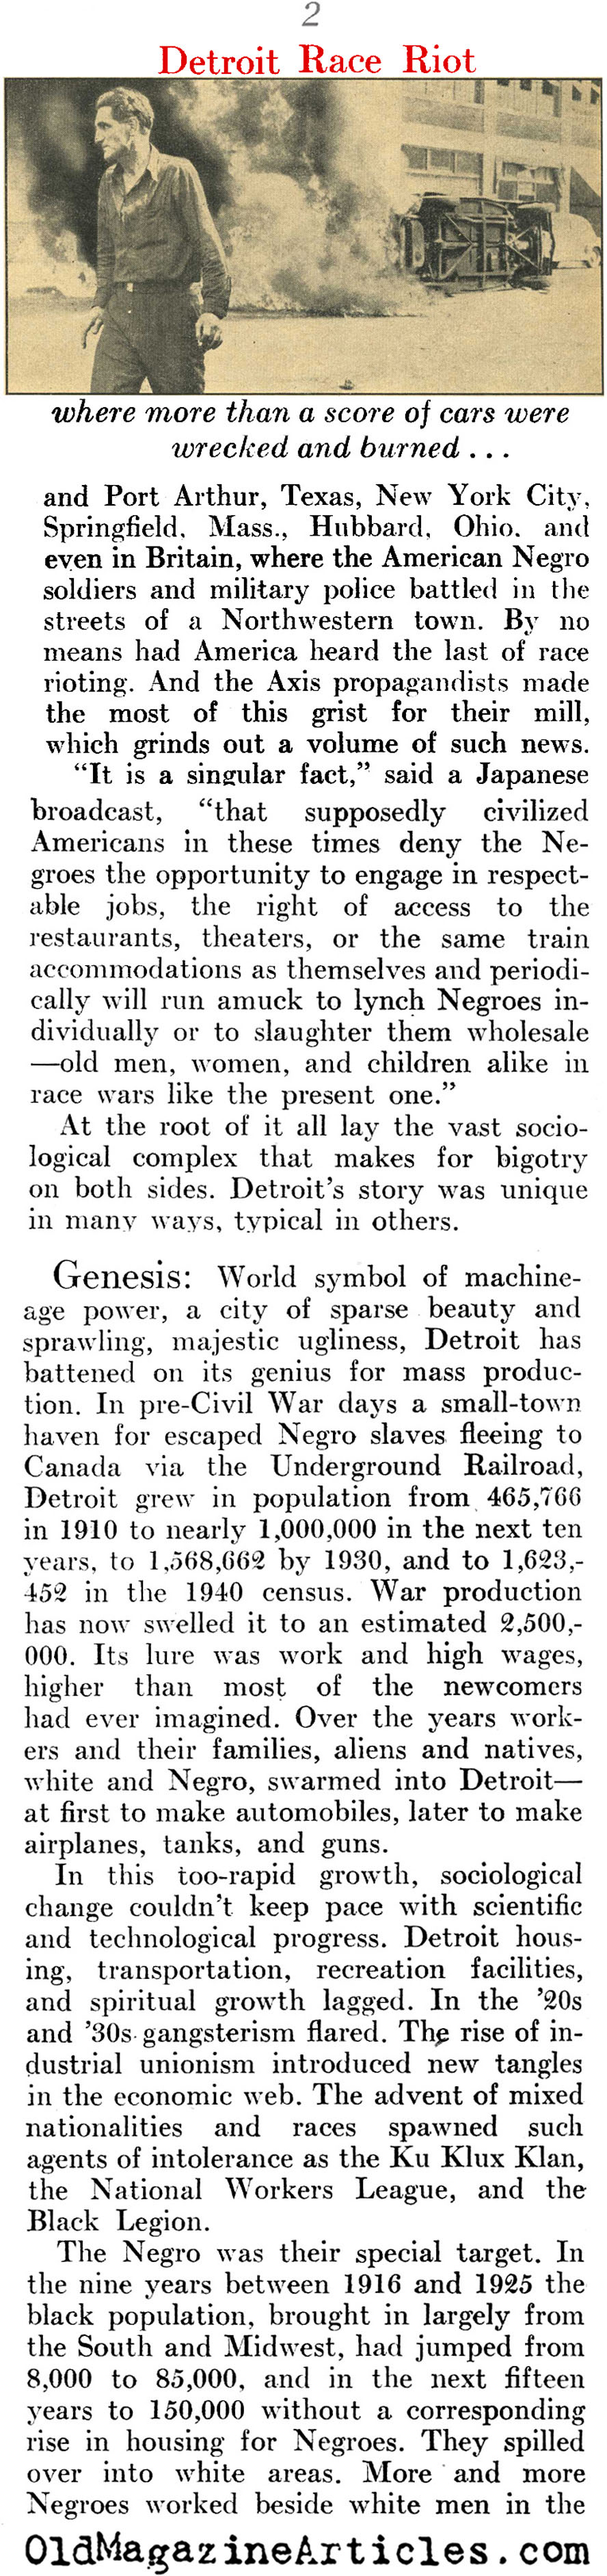 Race Riots (Newsweek Magazine, 1943)